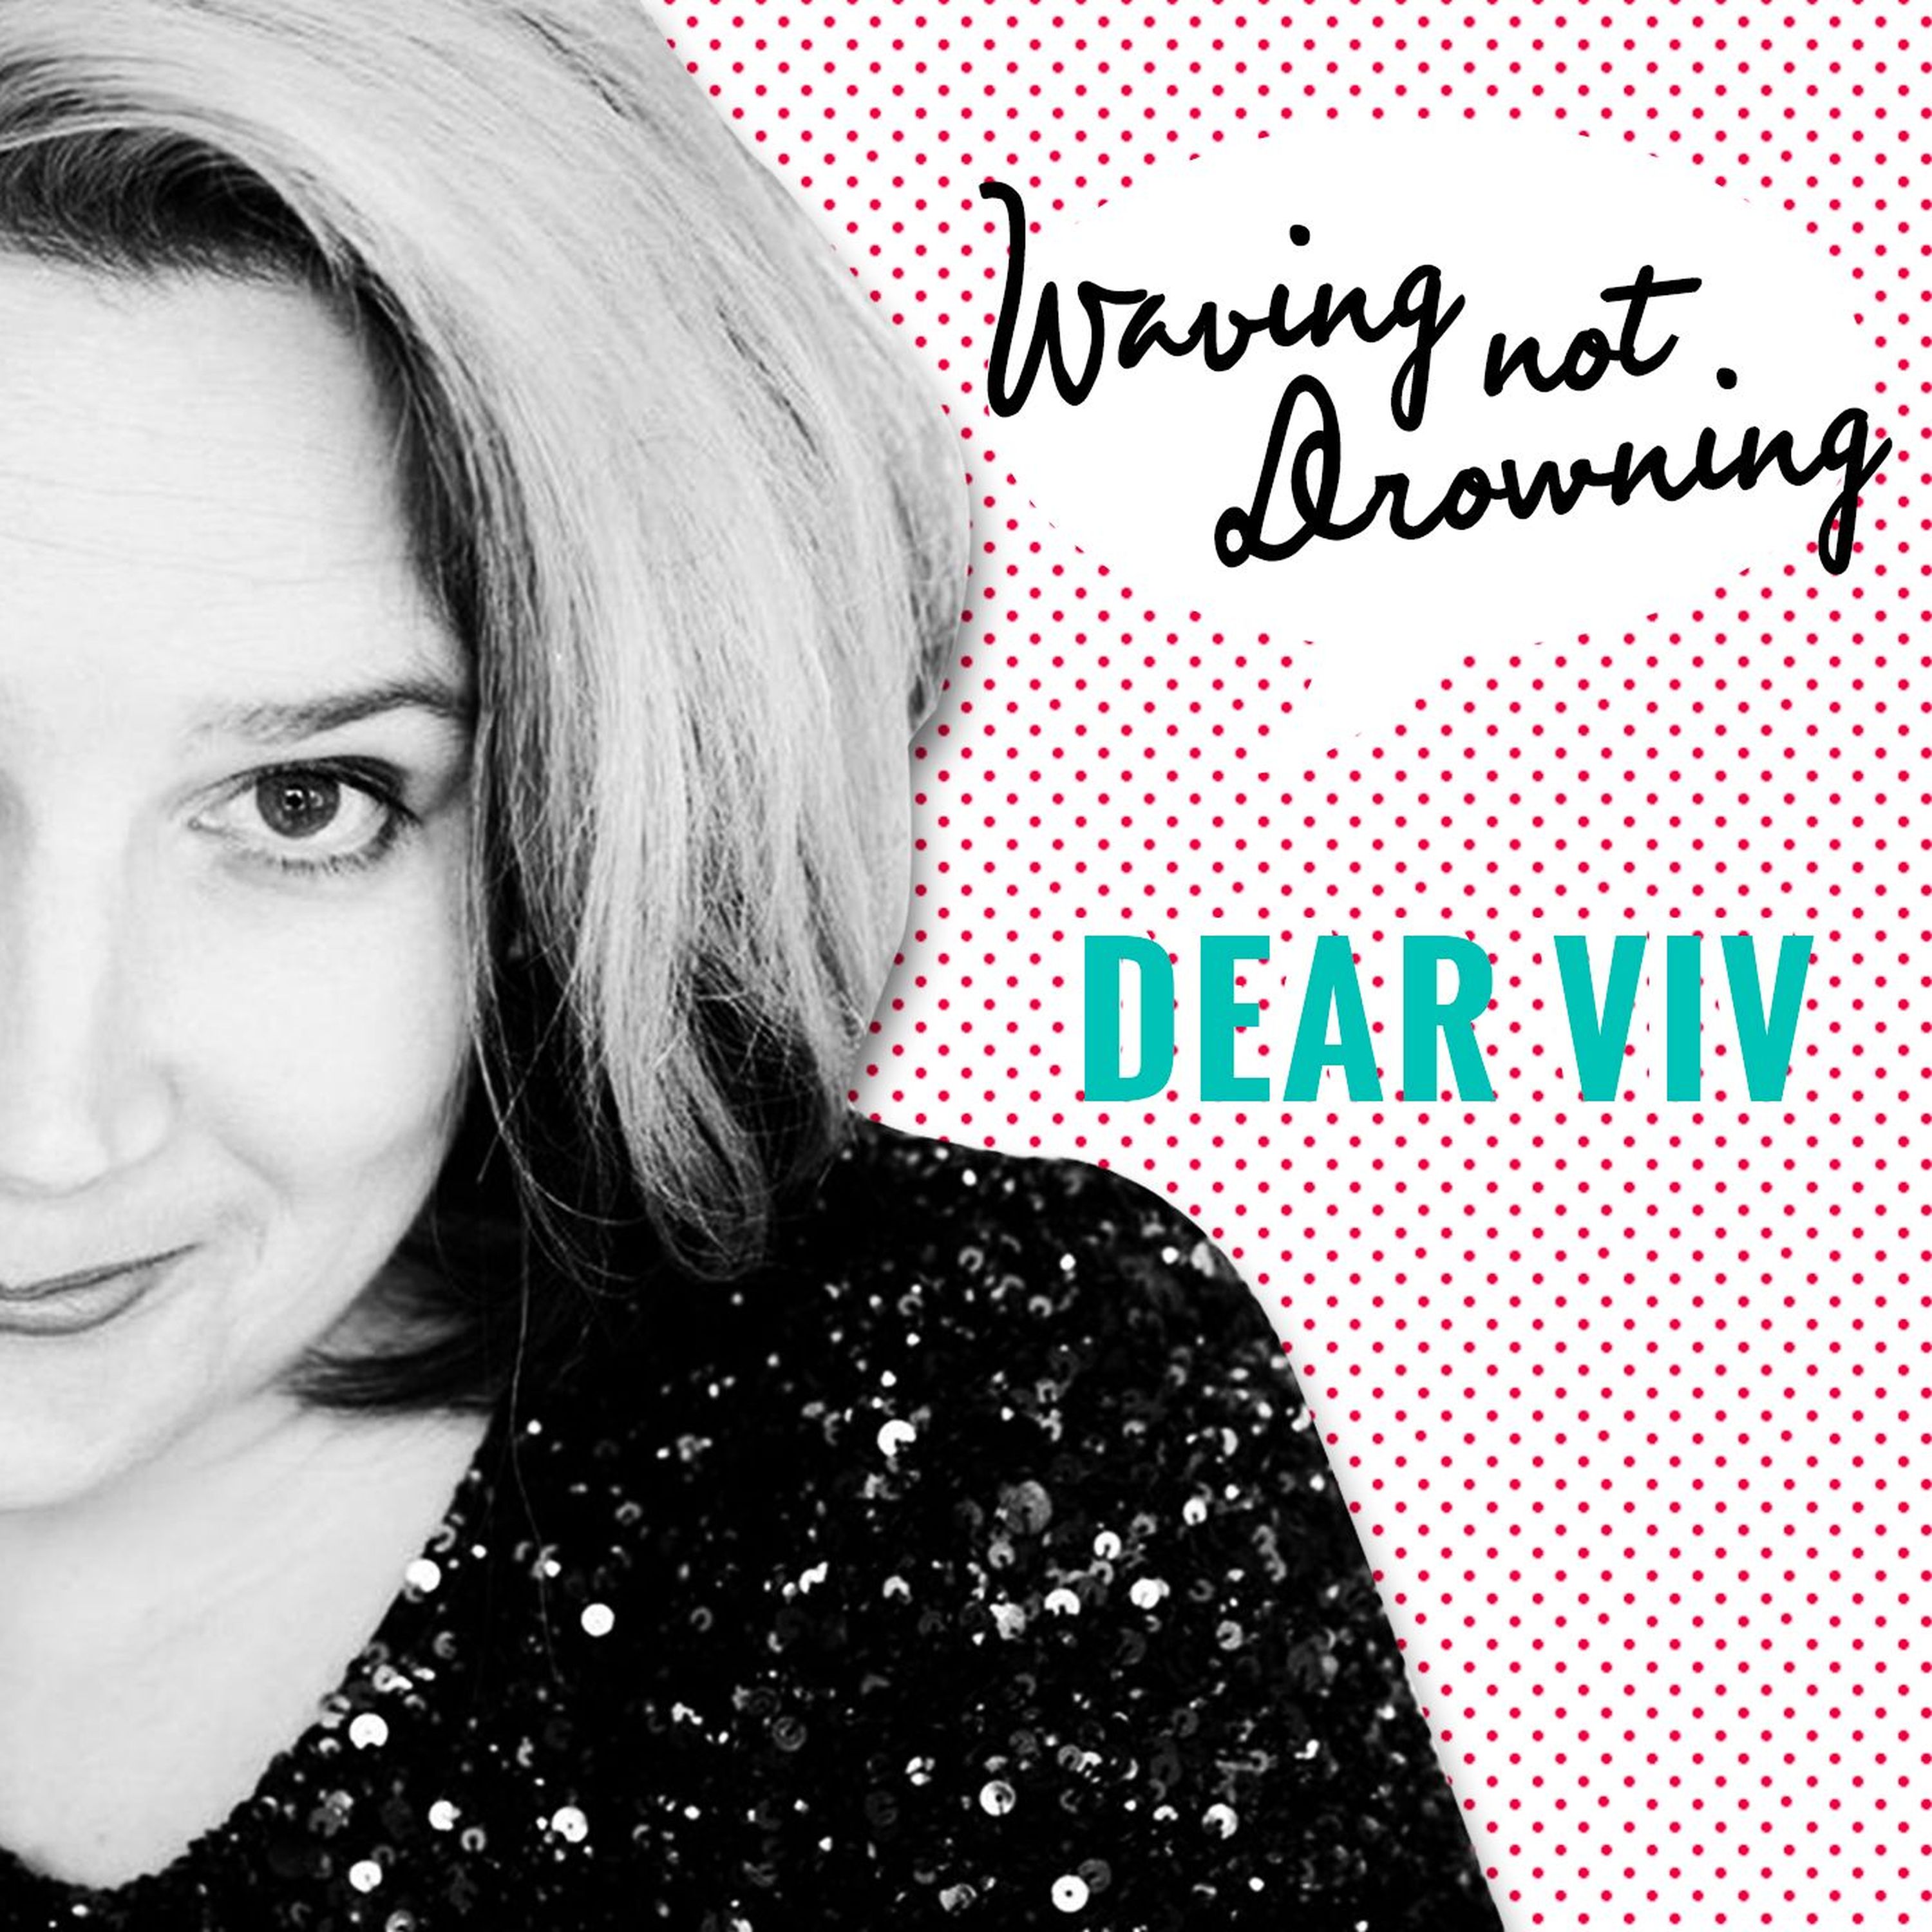 Dear Viv: Maternity leave is *really* boring